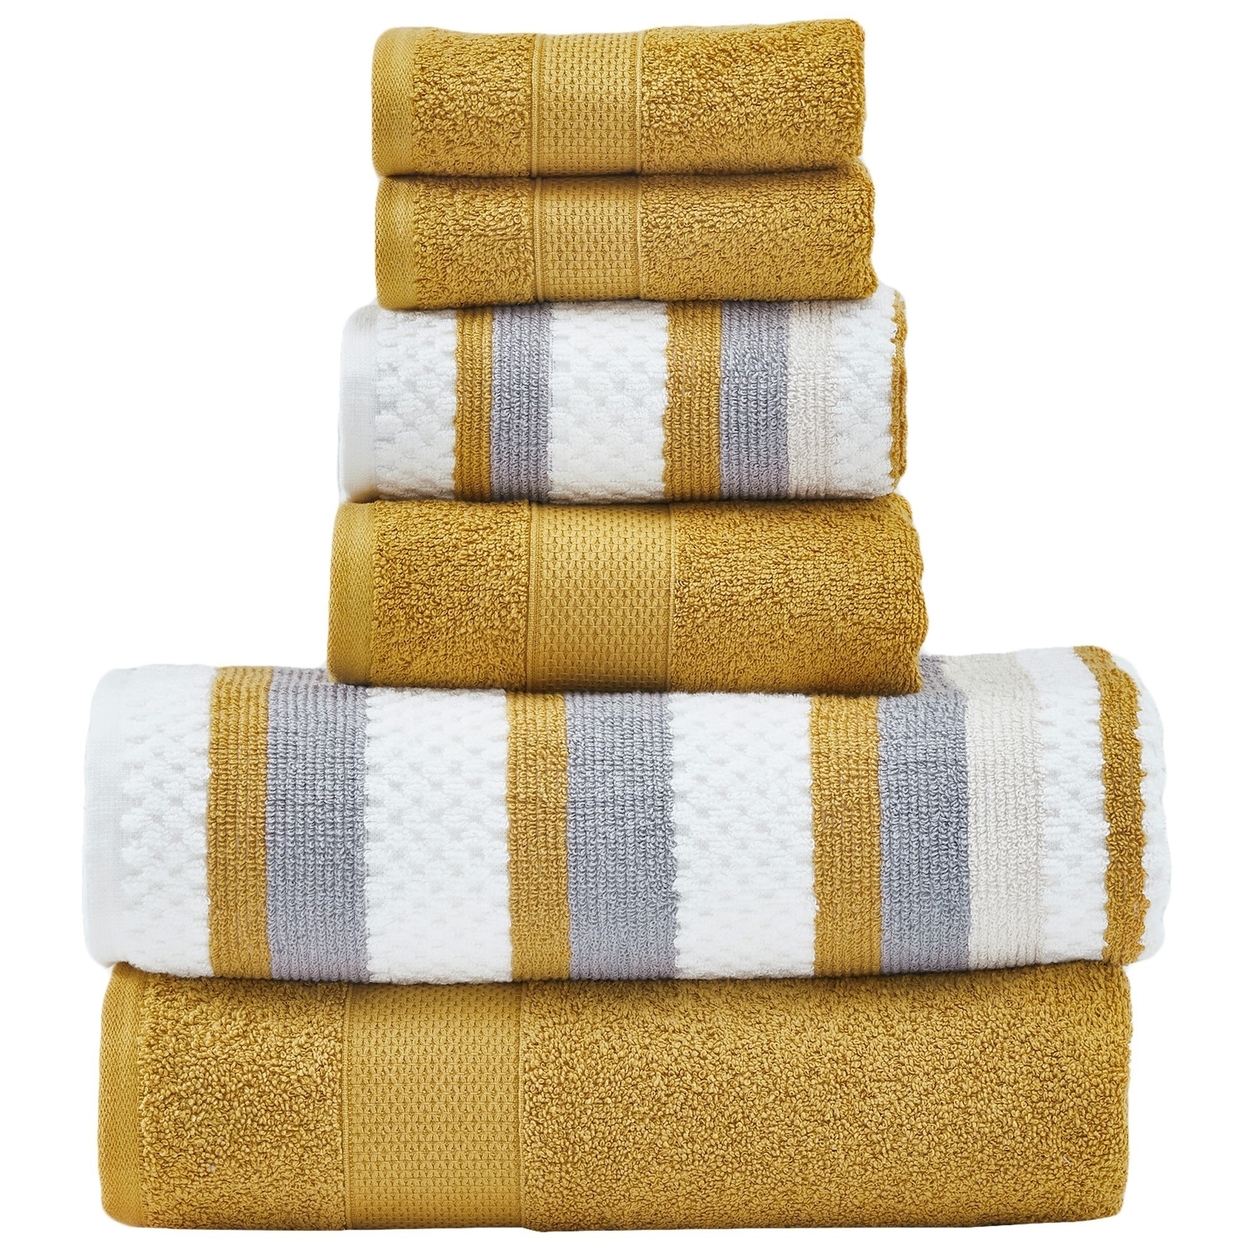 Nyx 6pc Soft Cotton Towel Set, Striped, White, Yellow By The Urban Port- Saltoro Sherpi